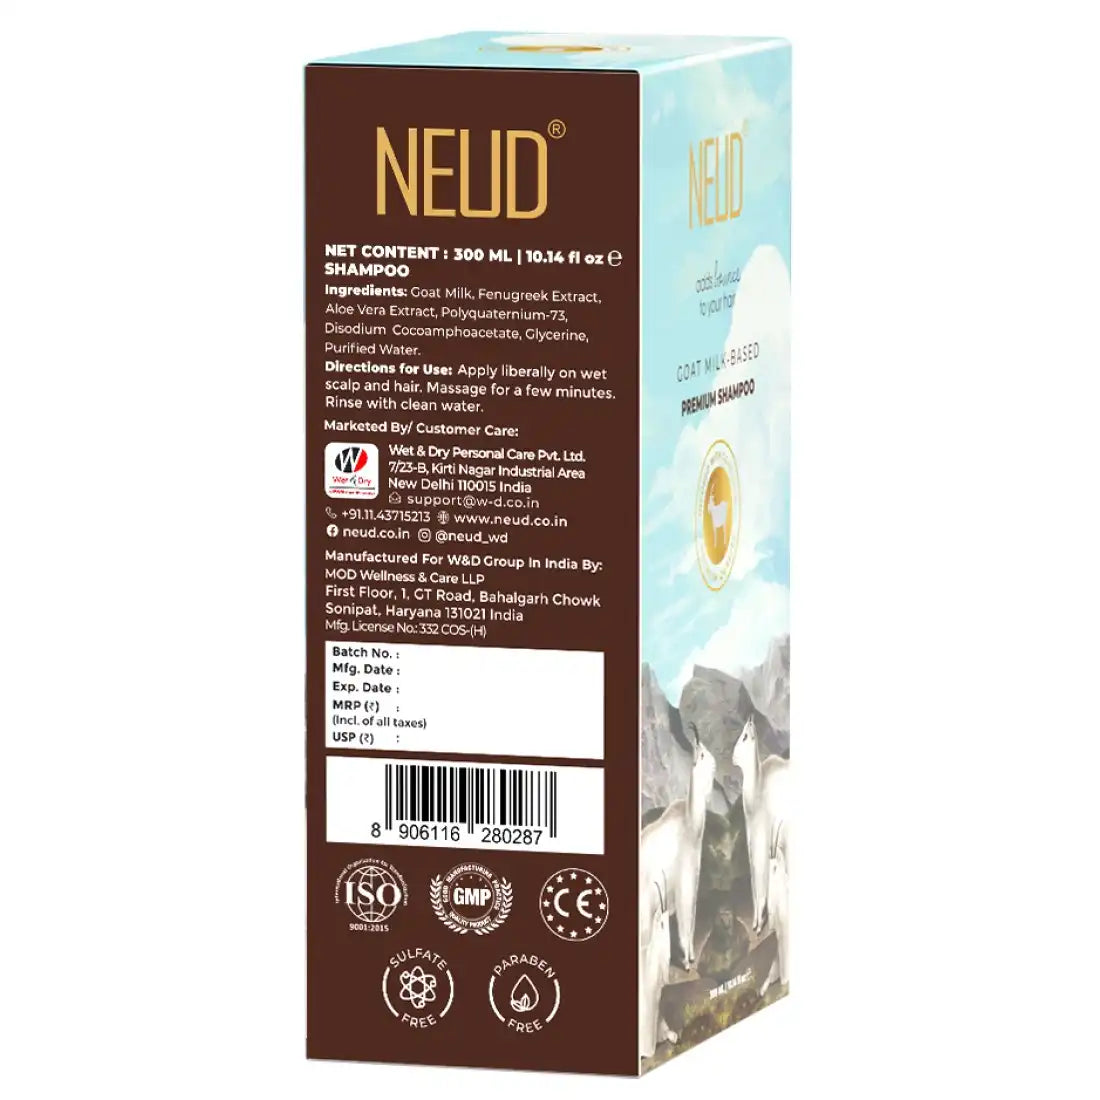 NEUD Premium Goat Milk Shampoo for Men & Women with Free Zipper Pouch